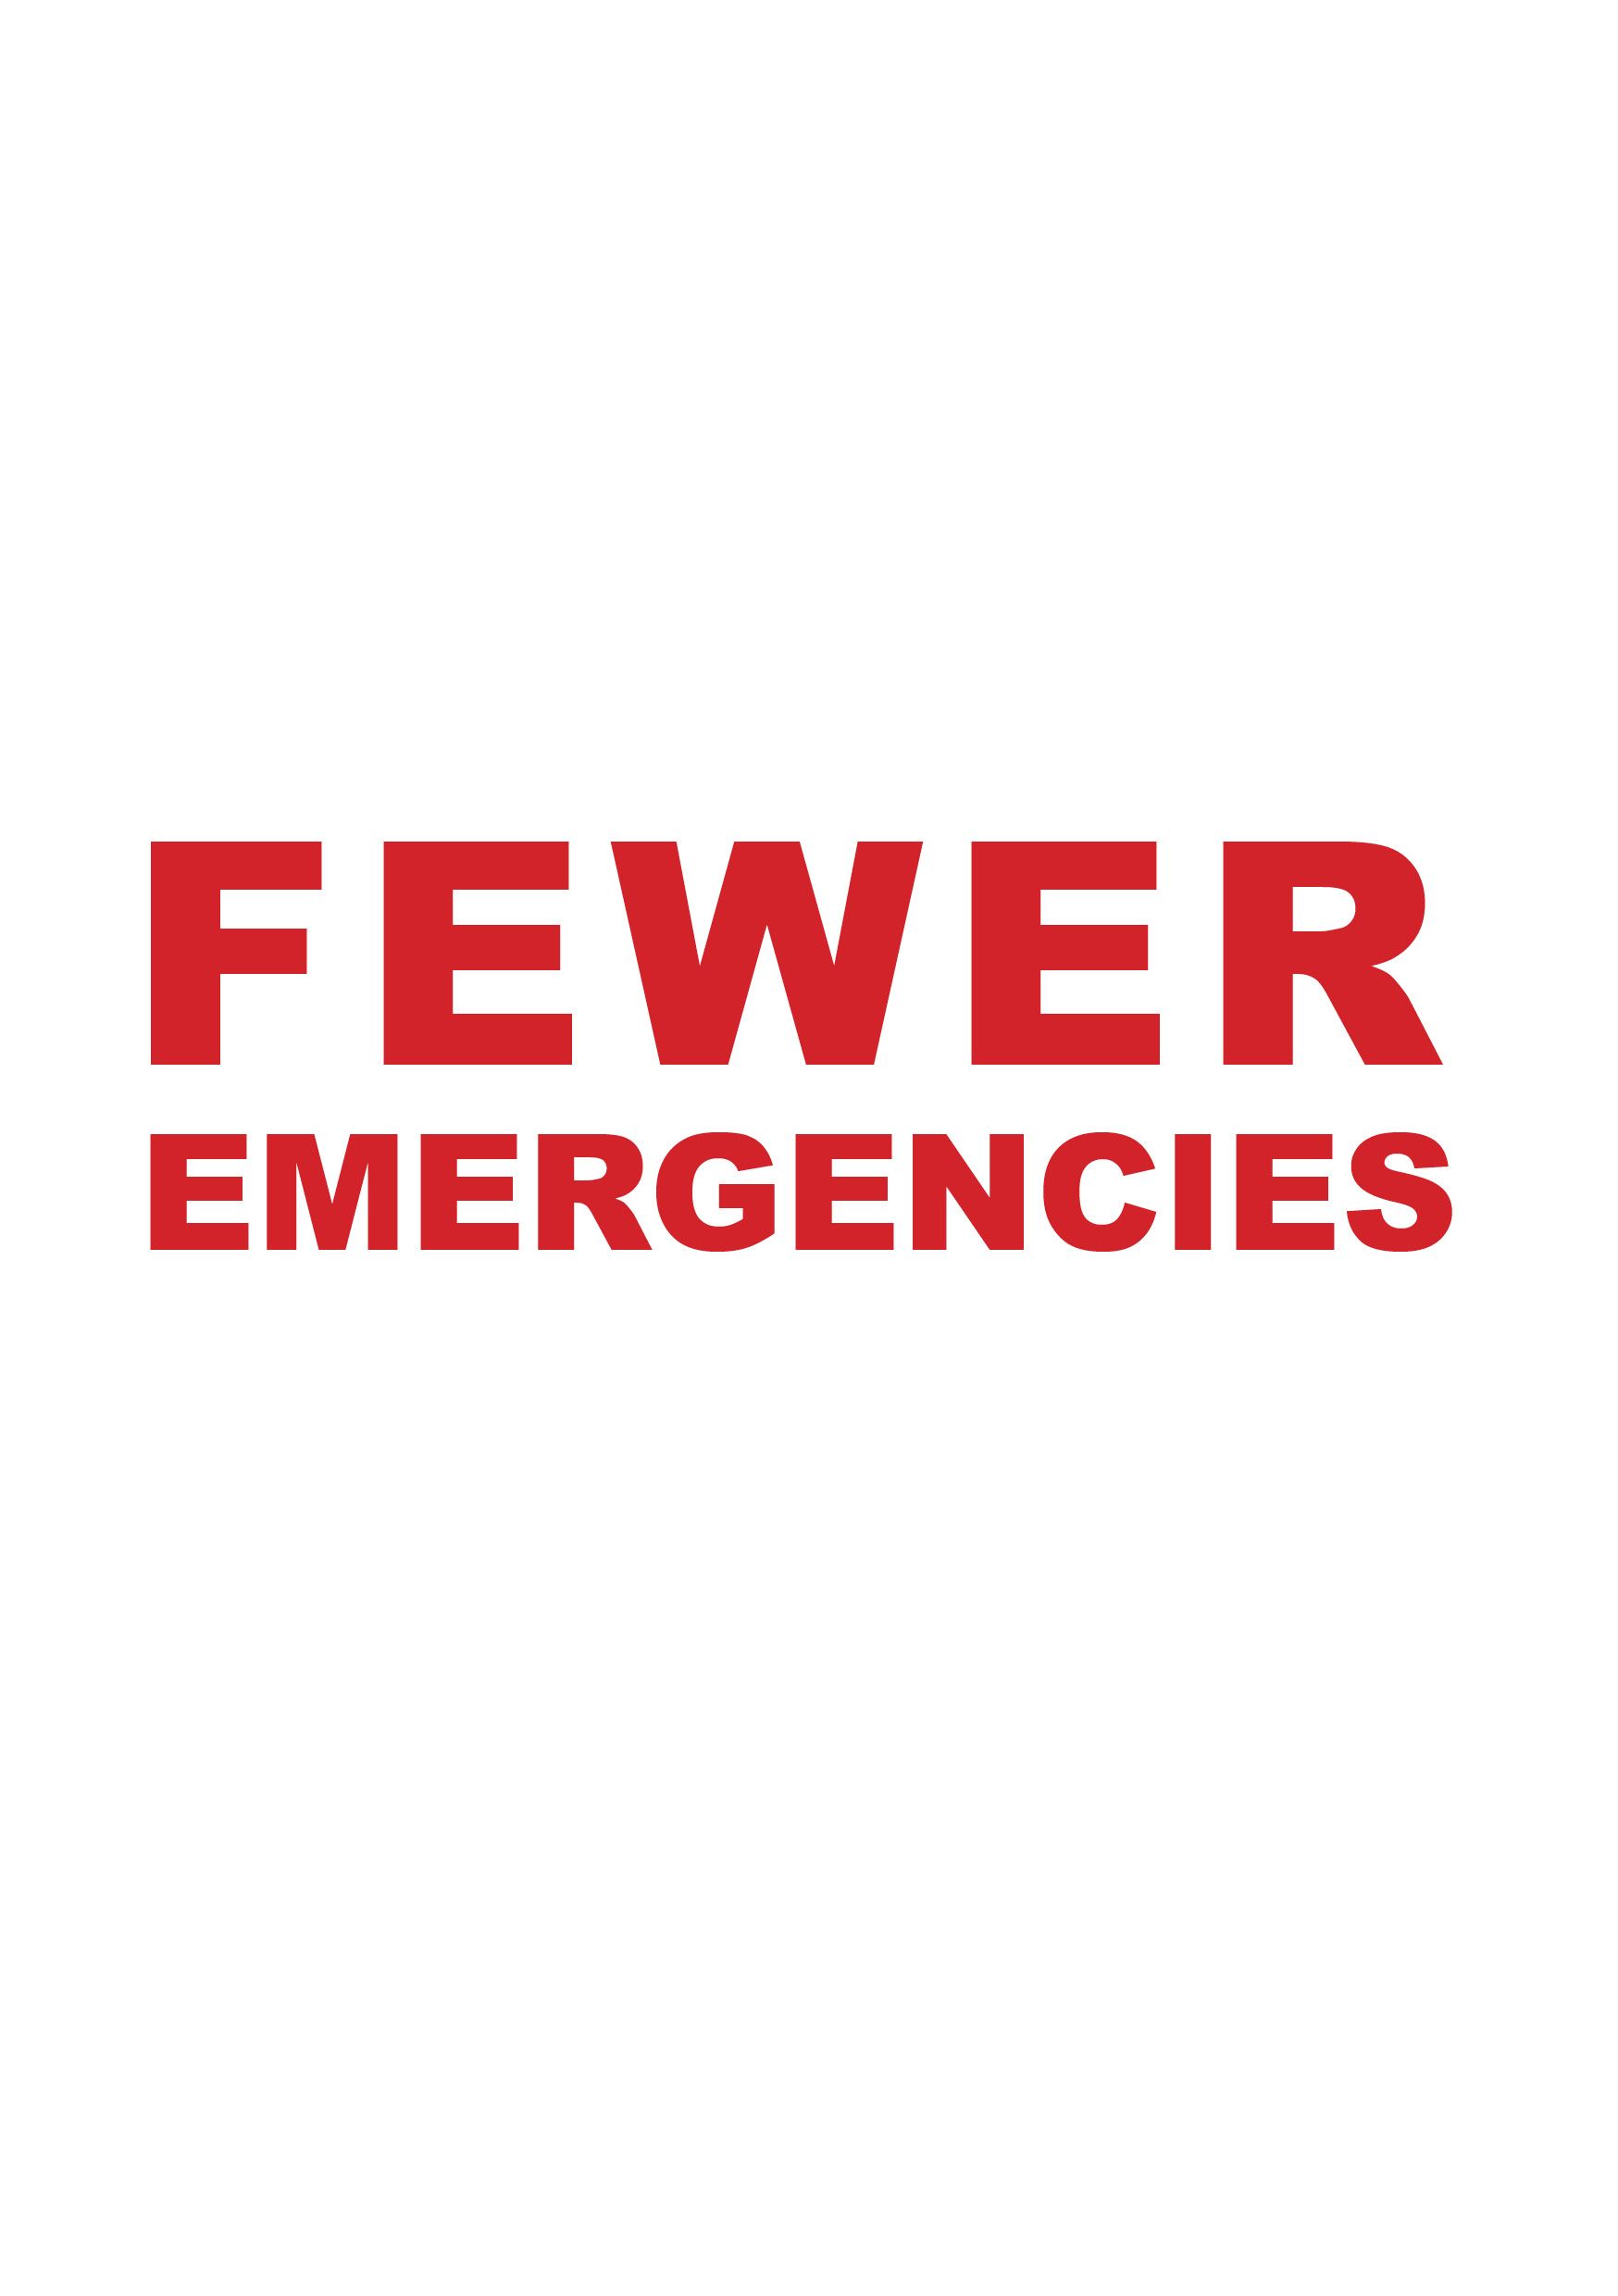 Fewer Emergencies flyer image